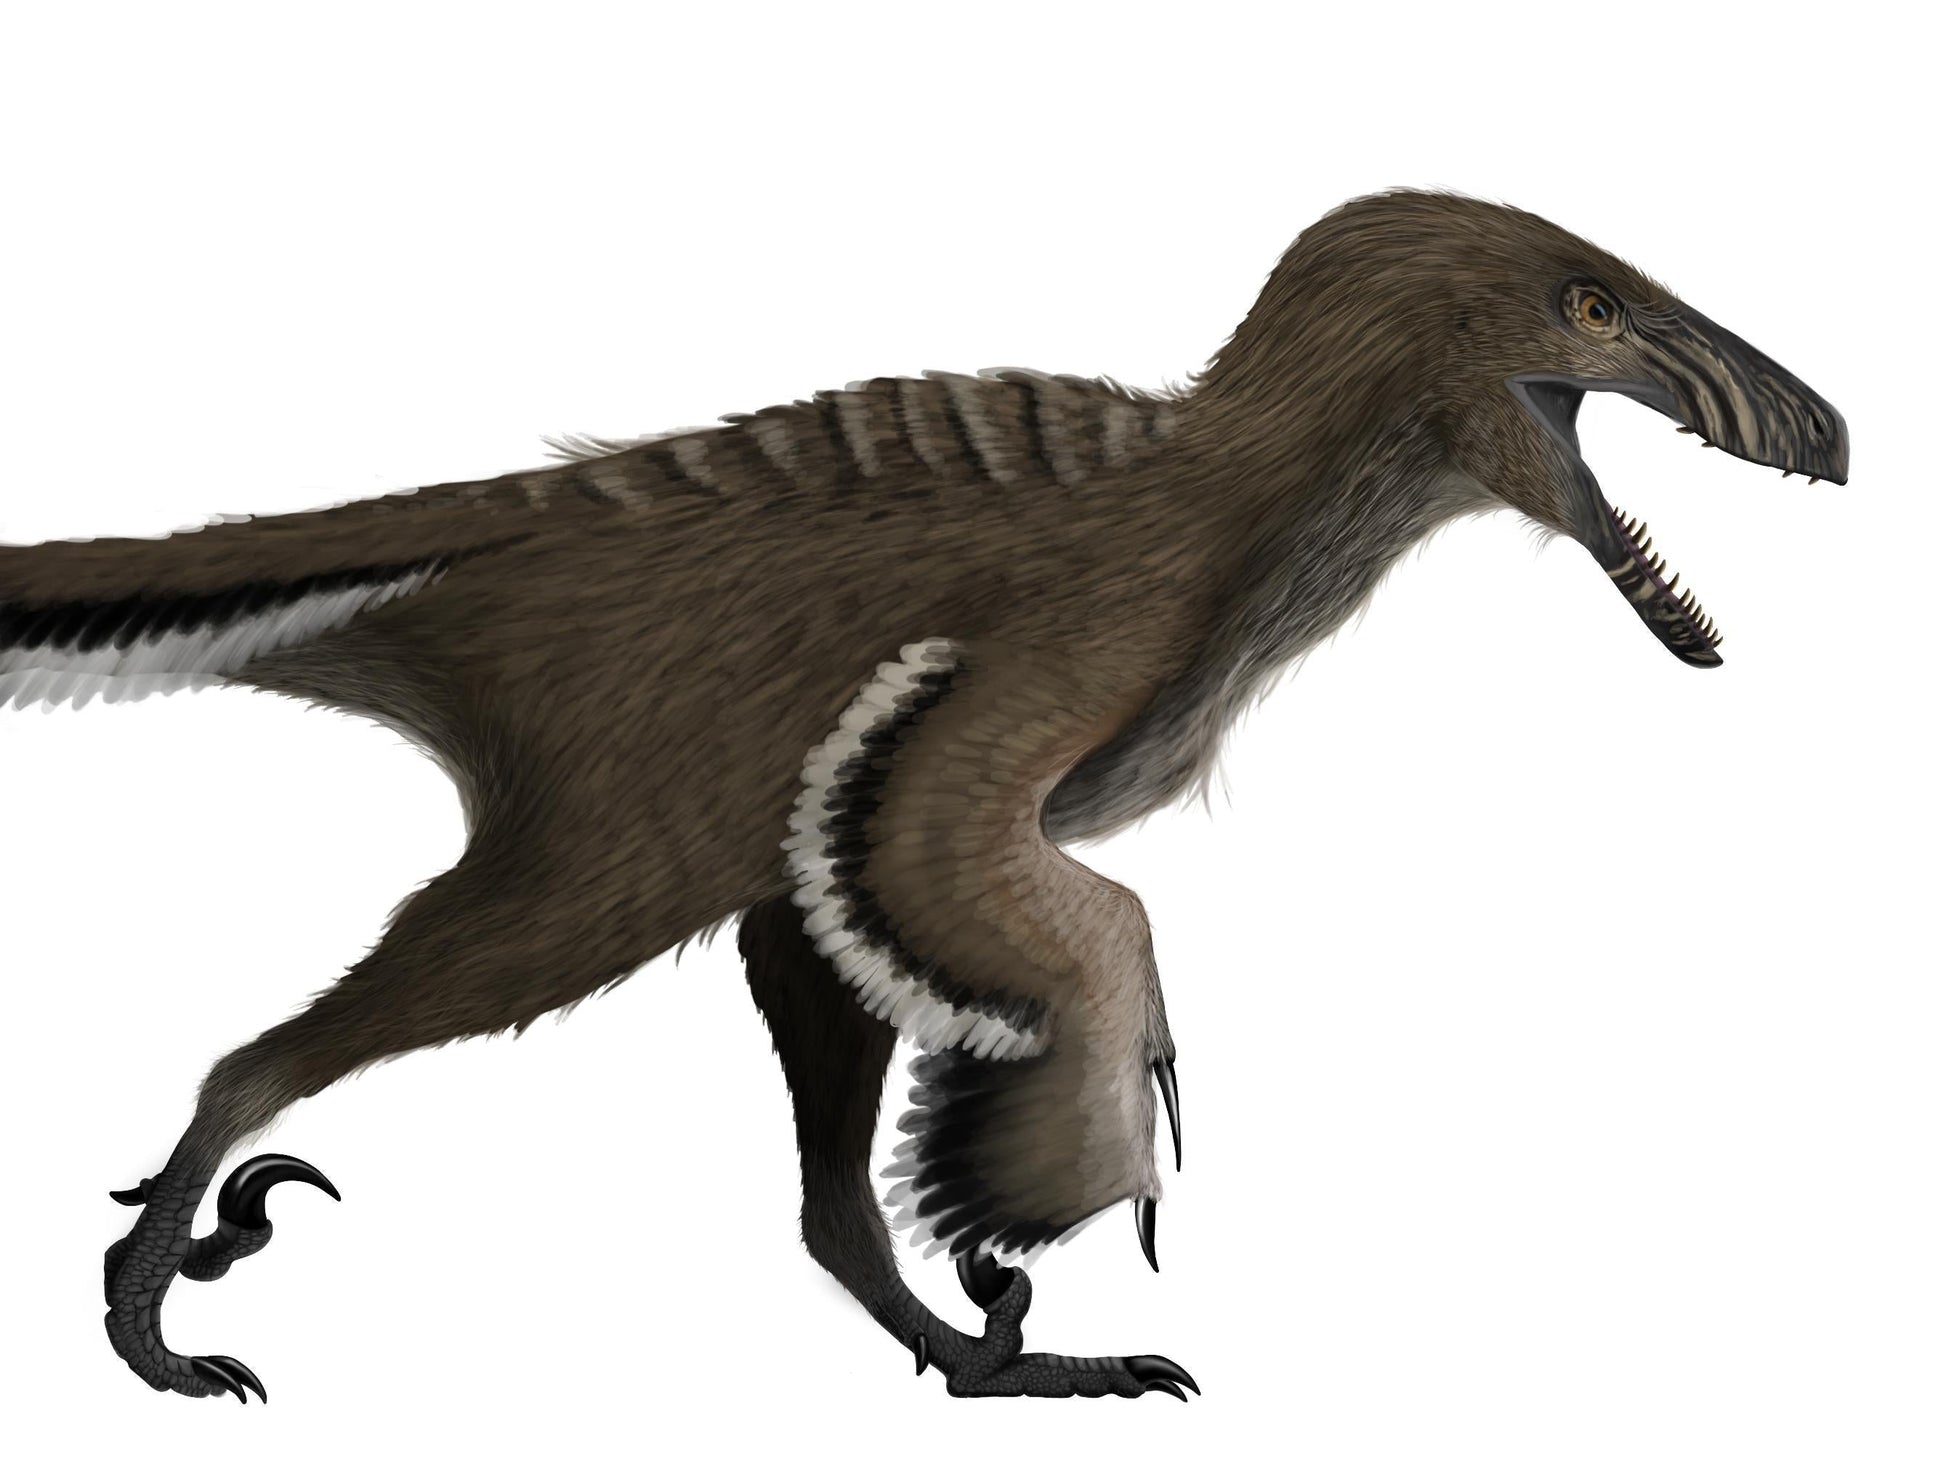 The dinosaur Deinonychus exclusive paleoart that comes with the Deinonychus killing claw cast